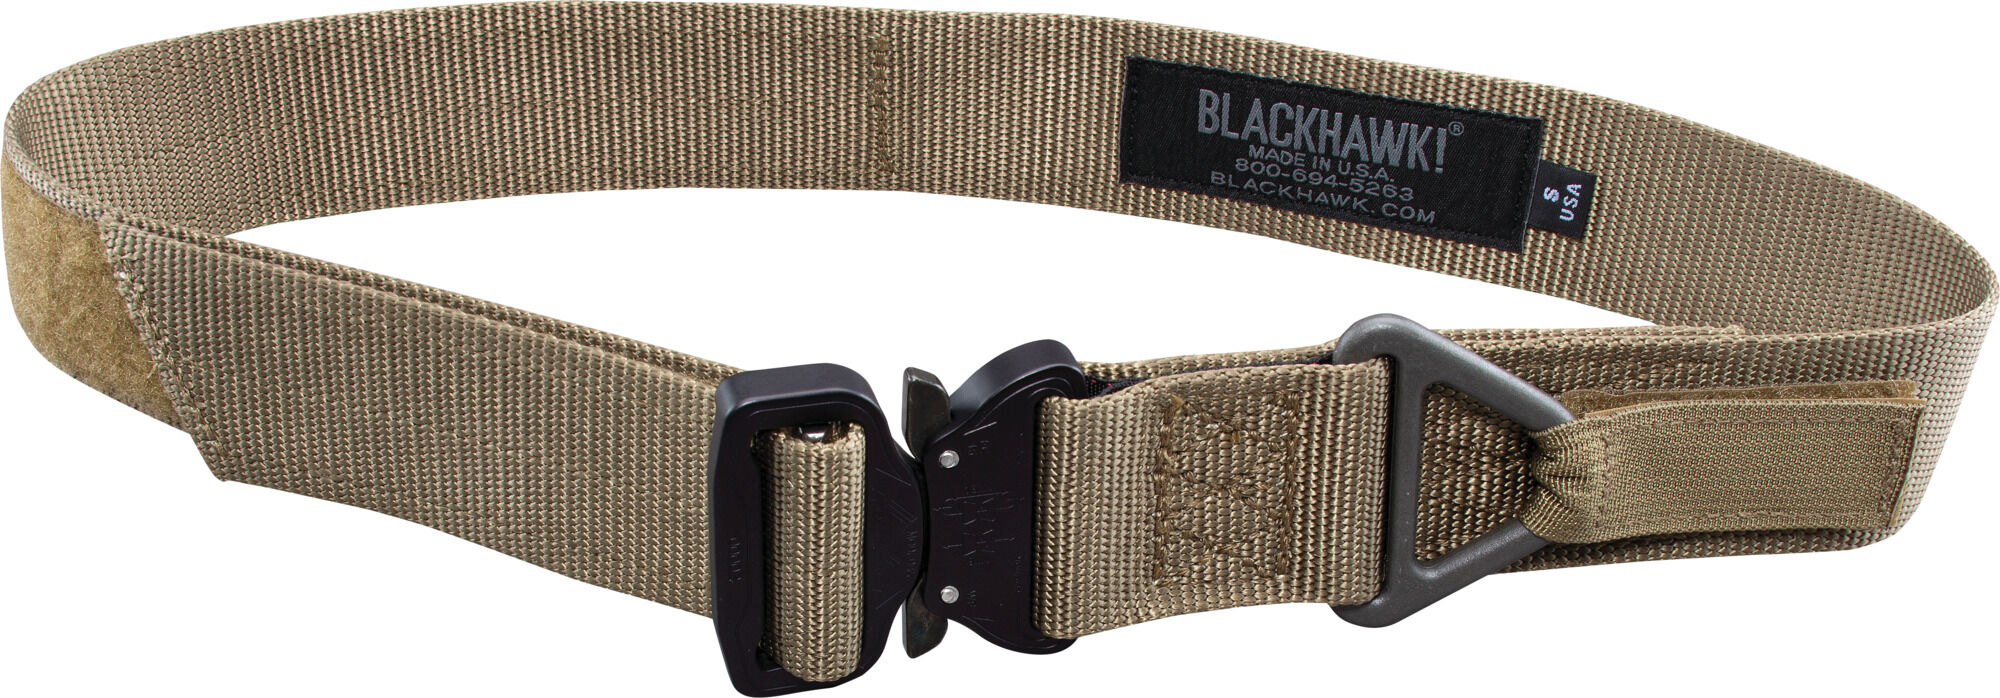 Blackhawk CQB Rigger's Belt w/ COBRA BUCKLE & 7,000 Pound Webbing 41CQ11DB NEW! 